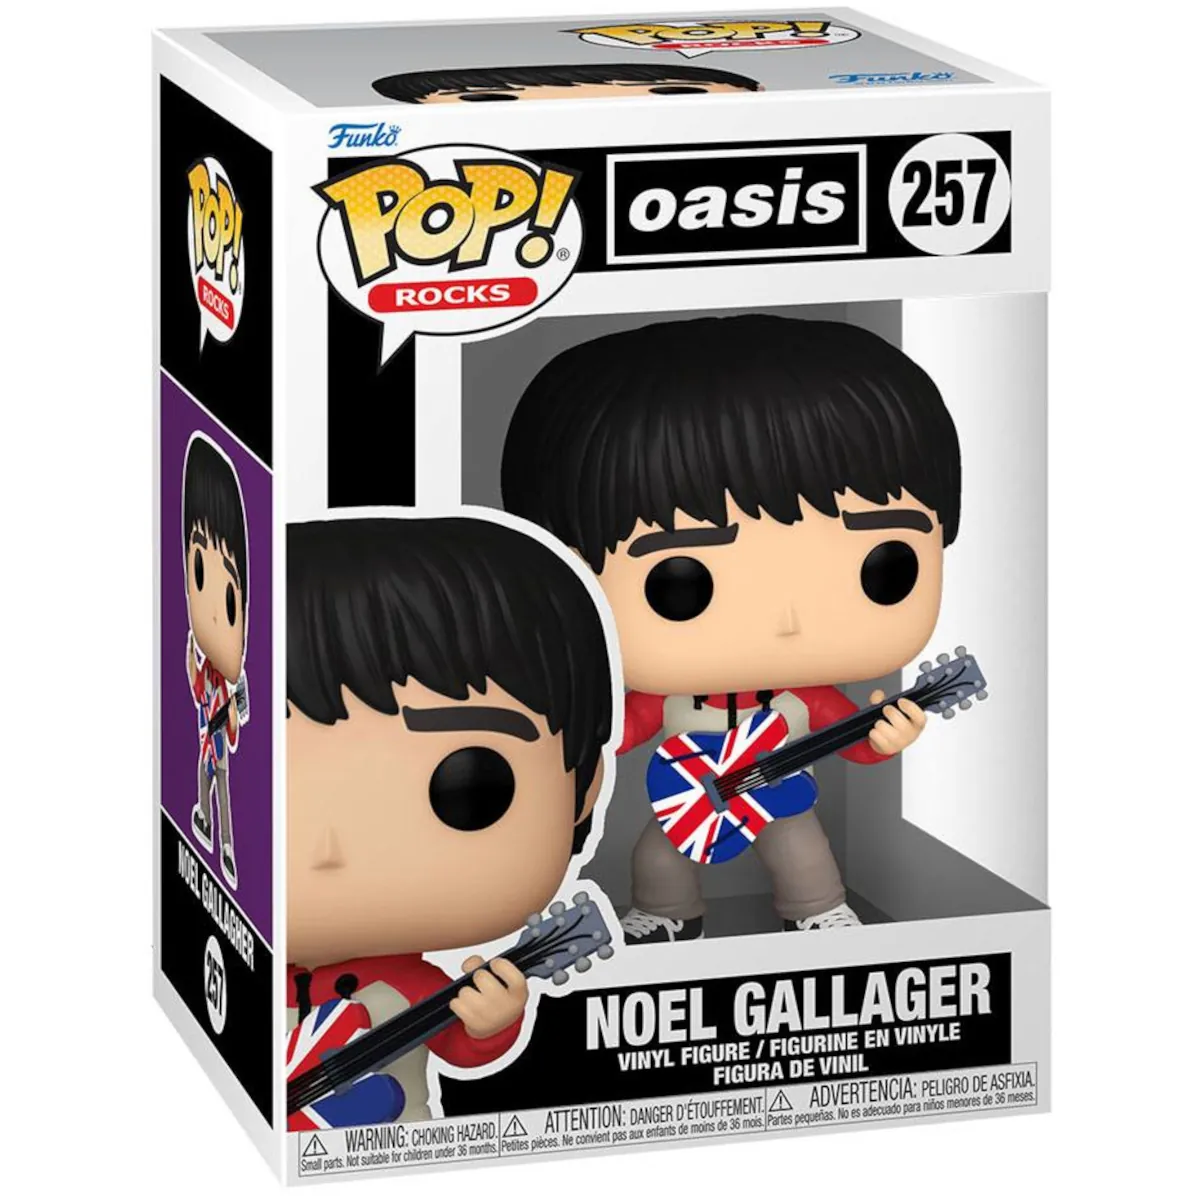 57764 Funko Pop! Rocks - Oasis - Noel Gallagher Collectable Vinyl Figure Box Front